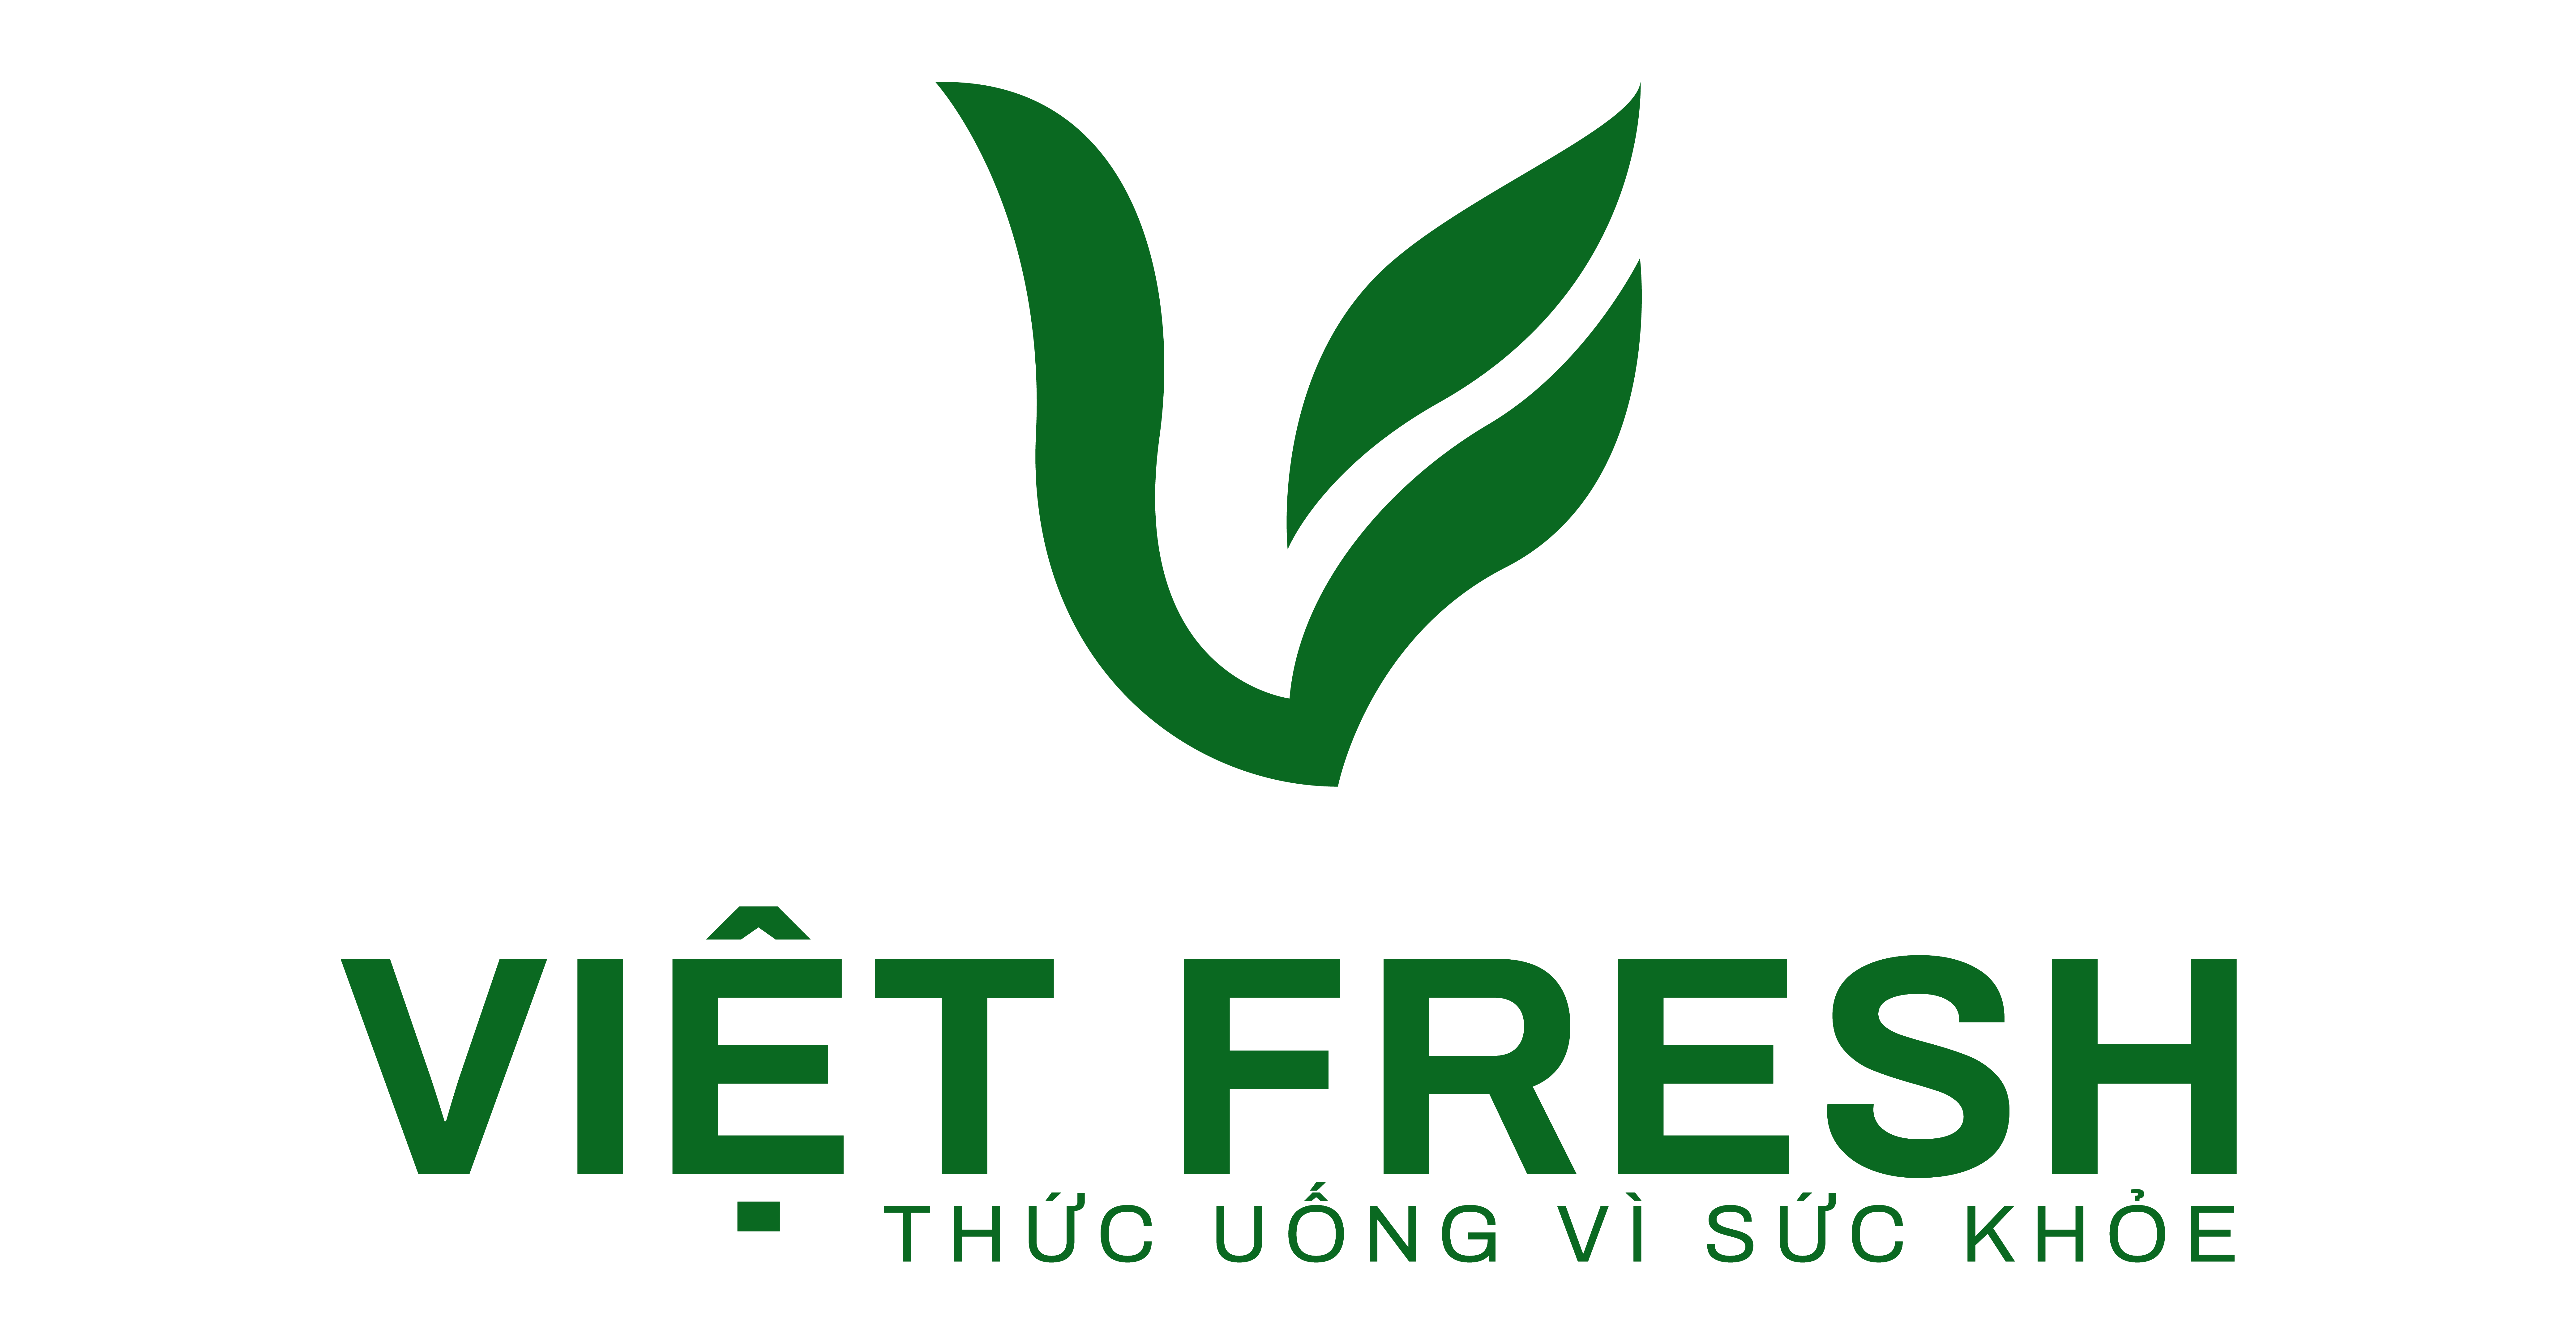 Việt frush